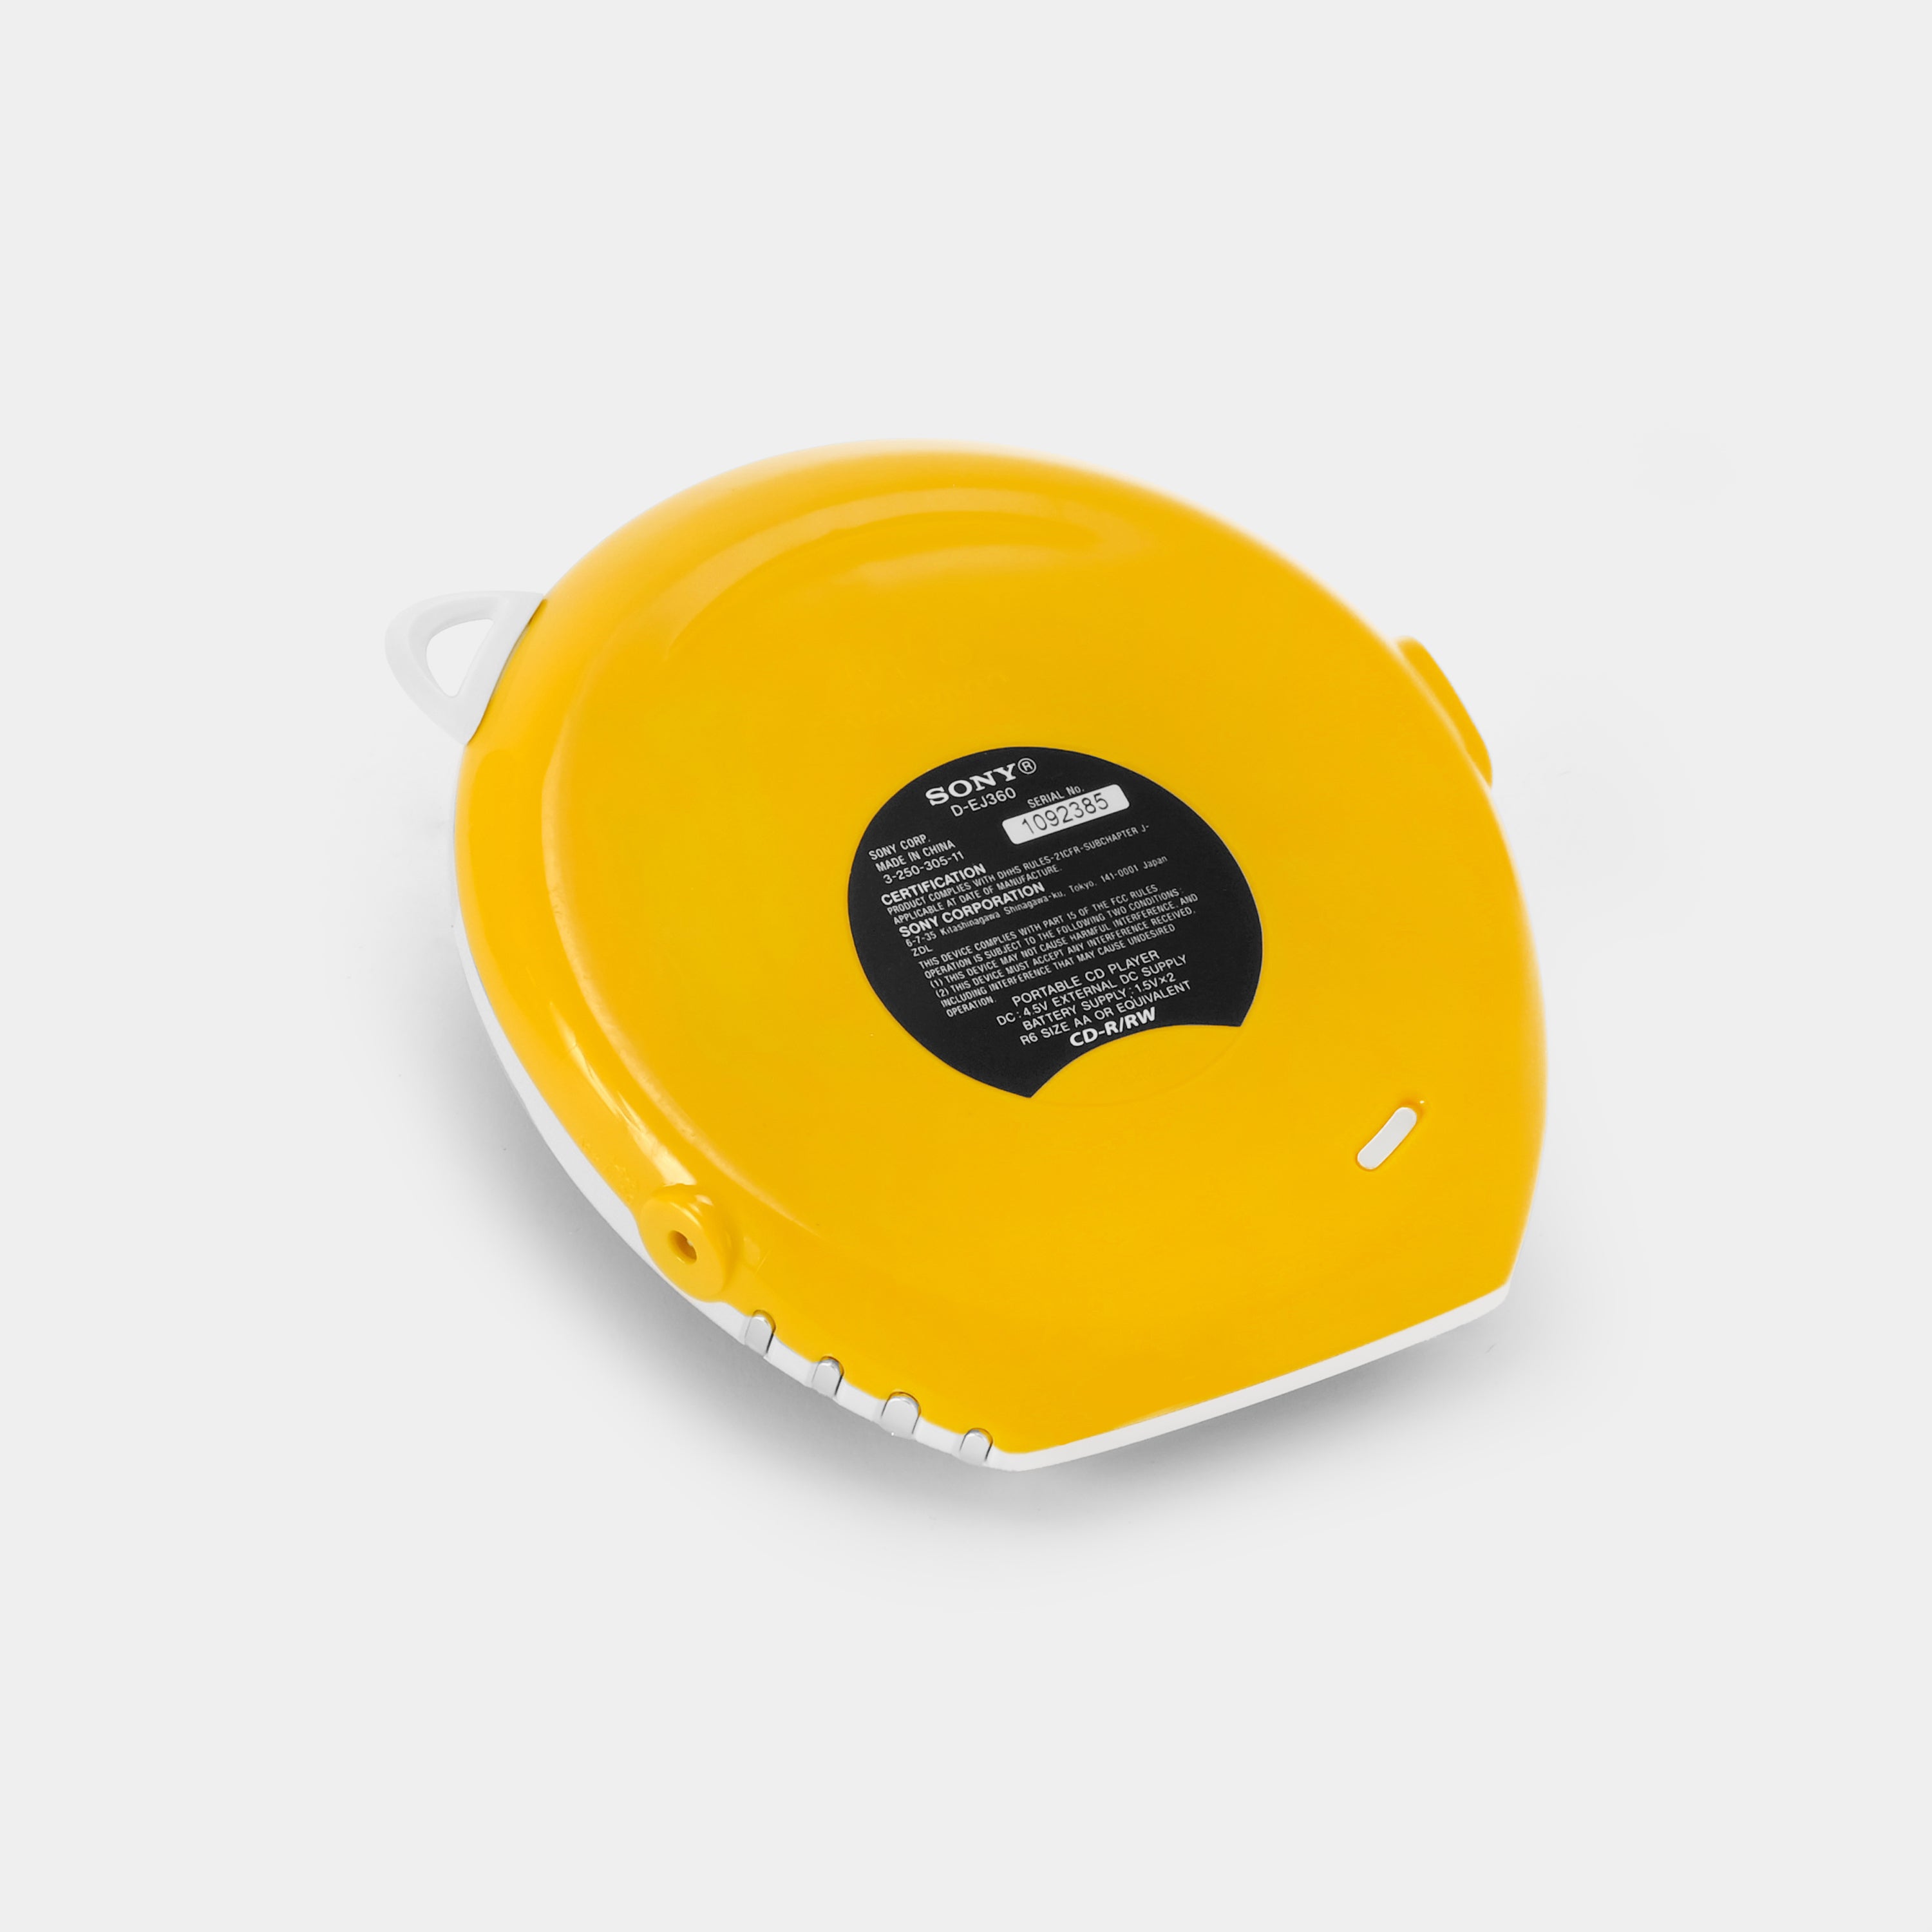  Sony D-EJ360 PSYC CD Walkman (Yellow) : Electronics